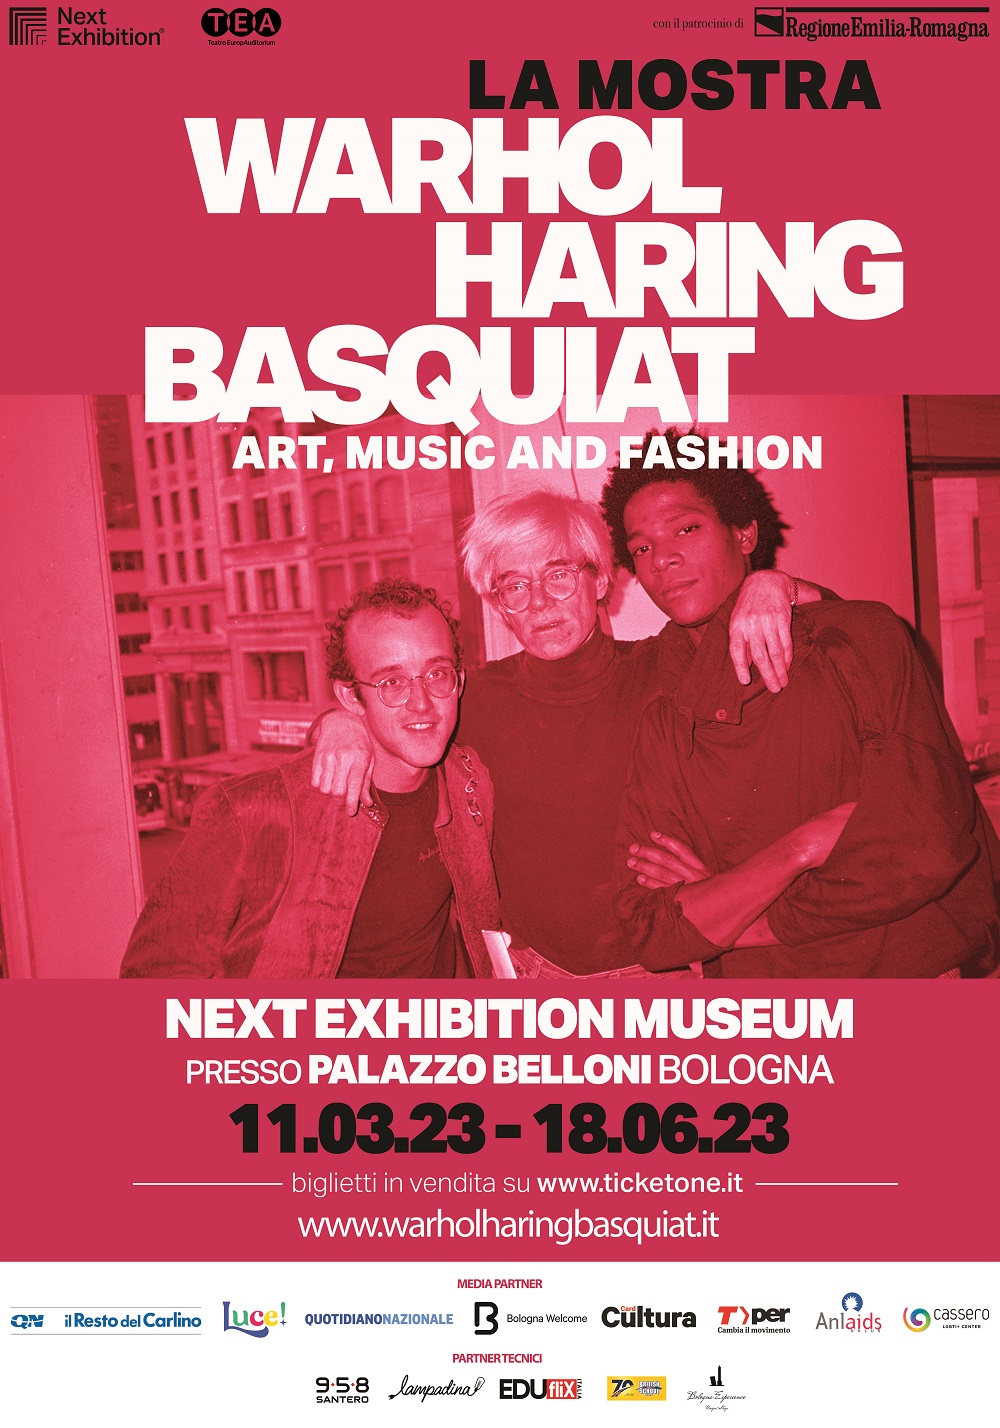 Warhol, Haring Basquiat: l’exhibit per combattere HIV